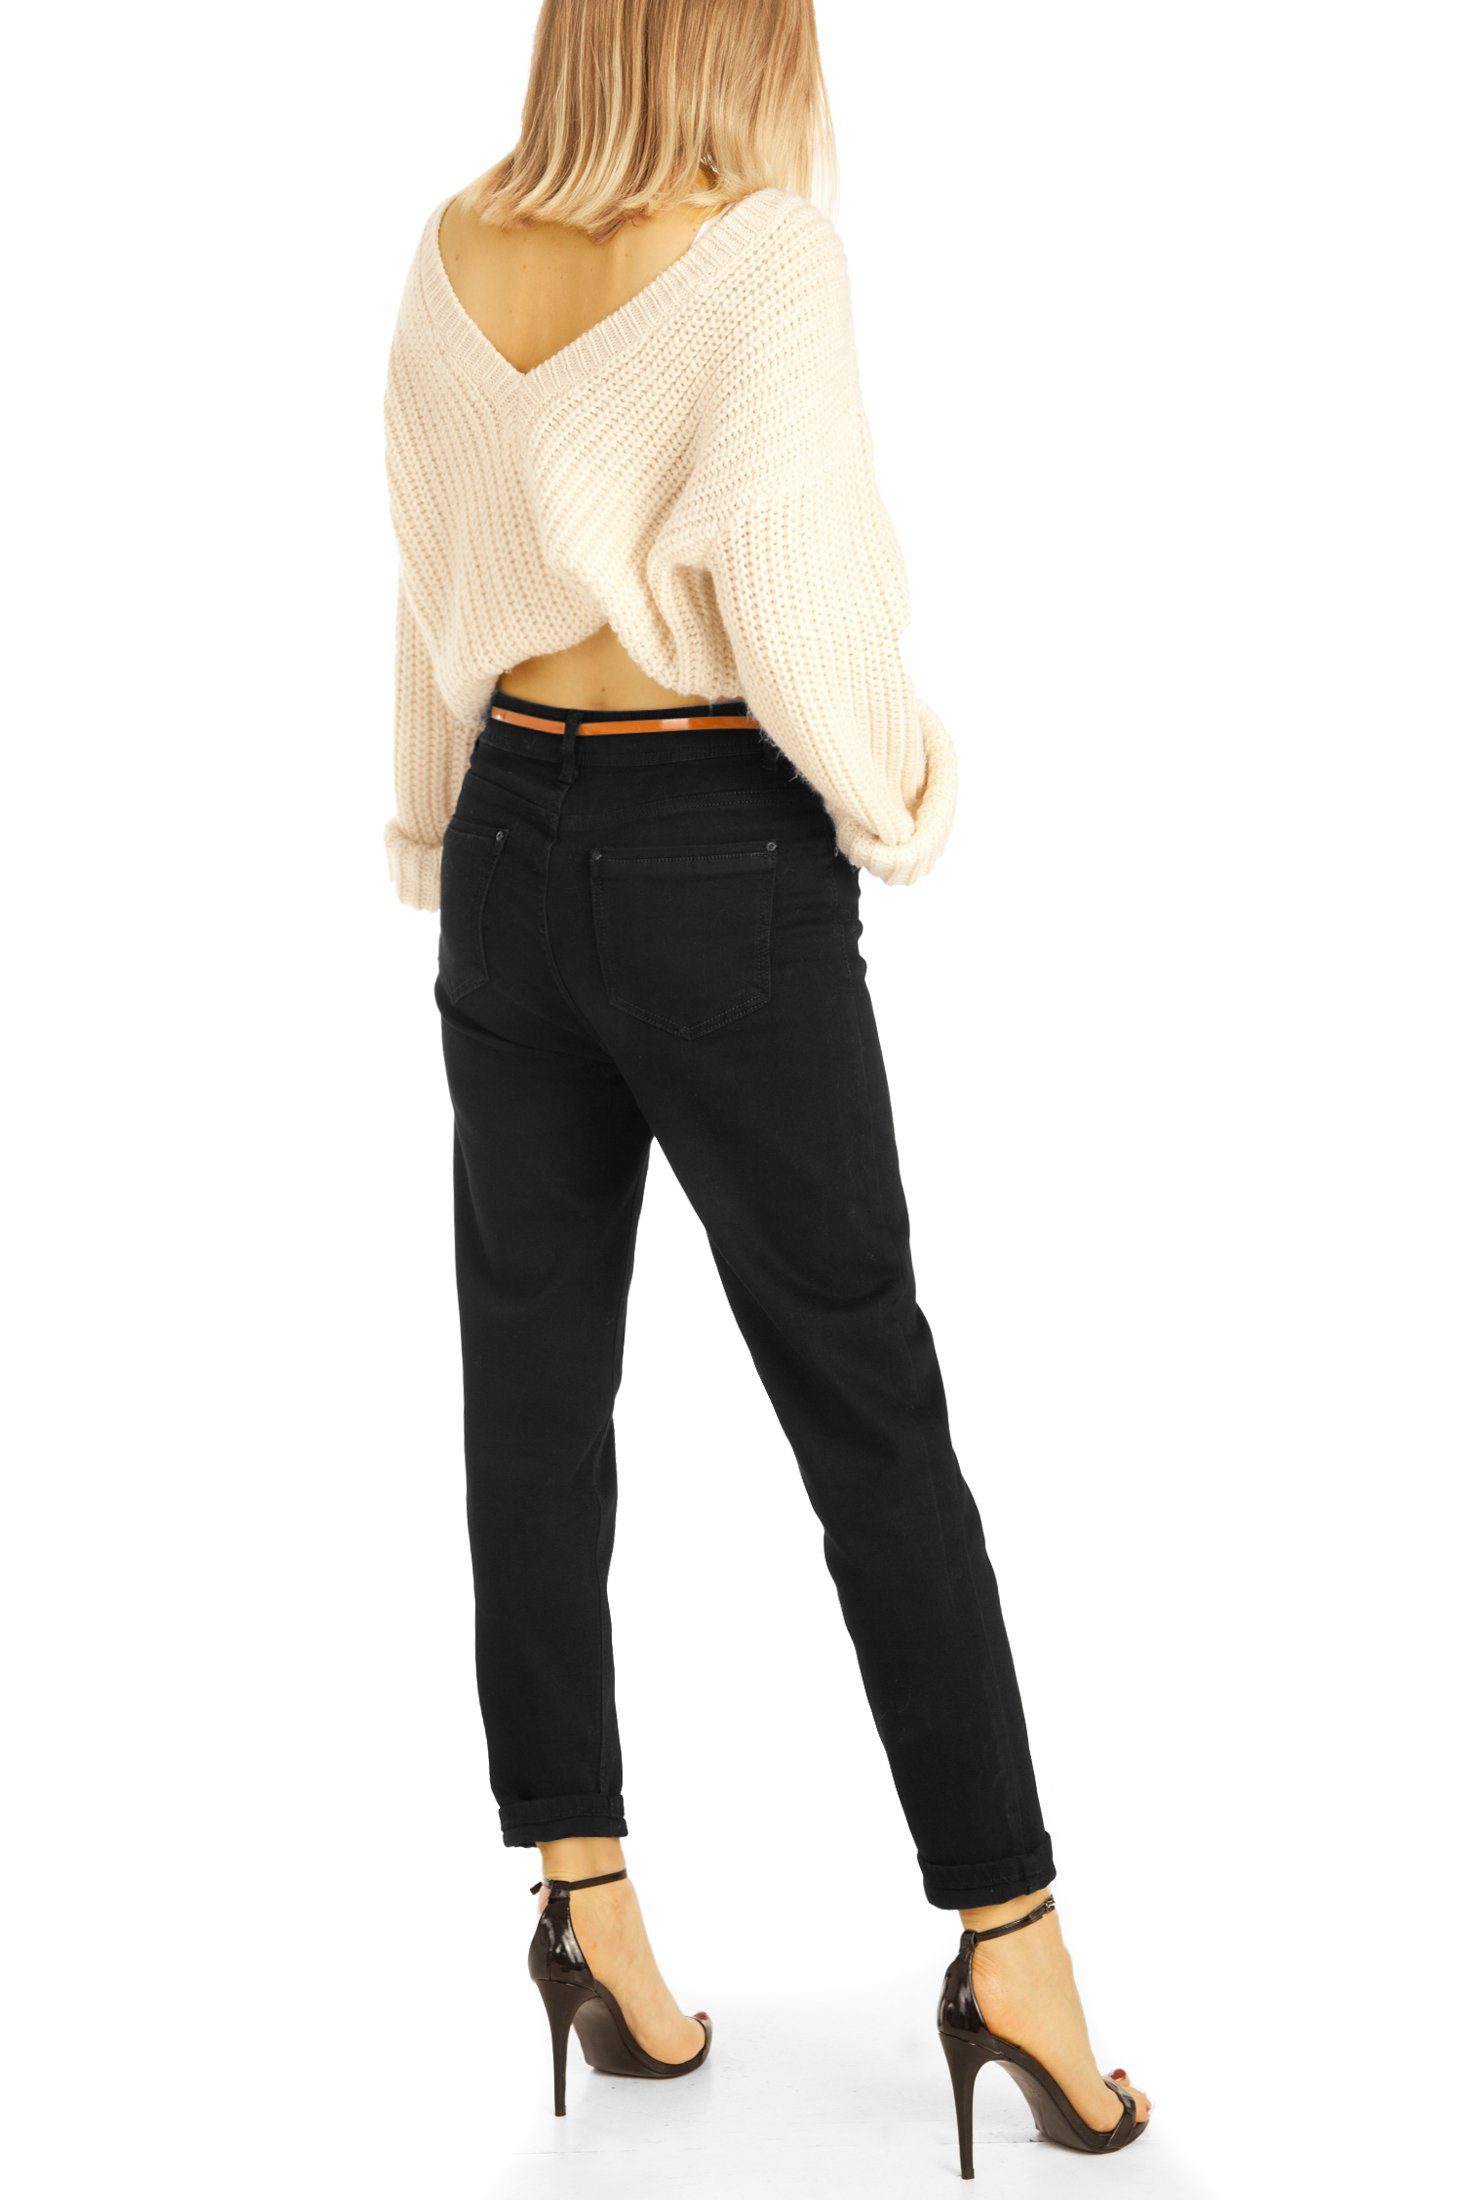 Mom-Fit - High-waist, High j13k-3 Damen styled Schwarze Hose be 5-Pocket-Style, - Jeans Stretch-Anteil, Waist Mom Jeans, mit High-waist-Jeans